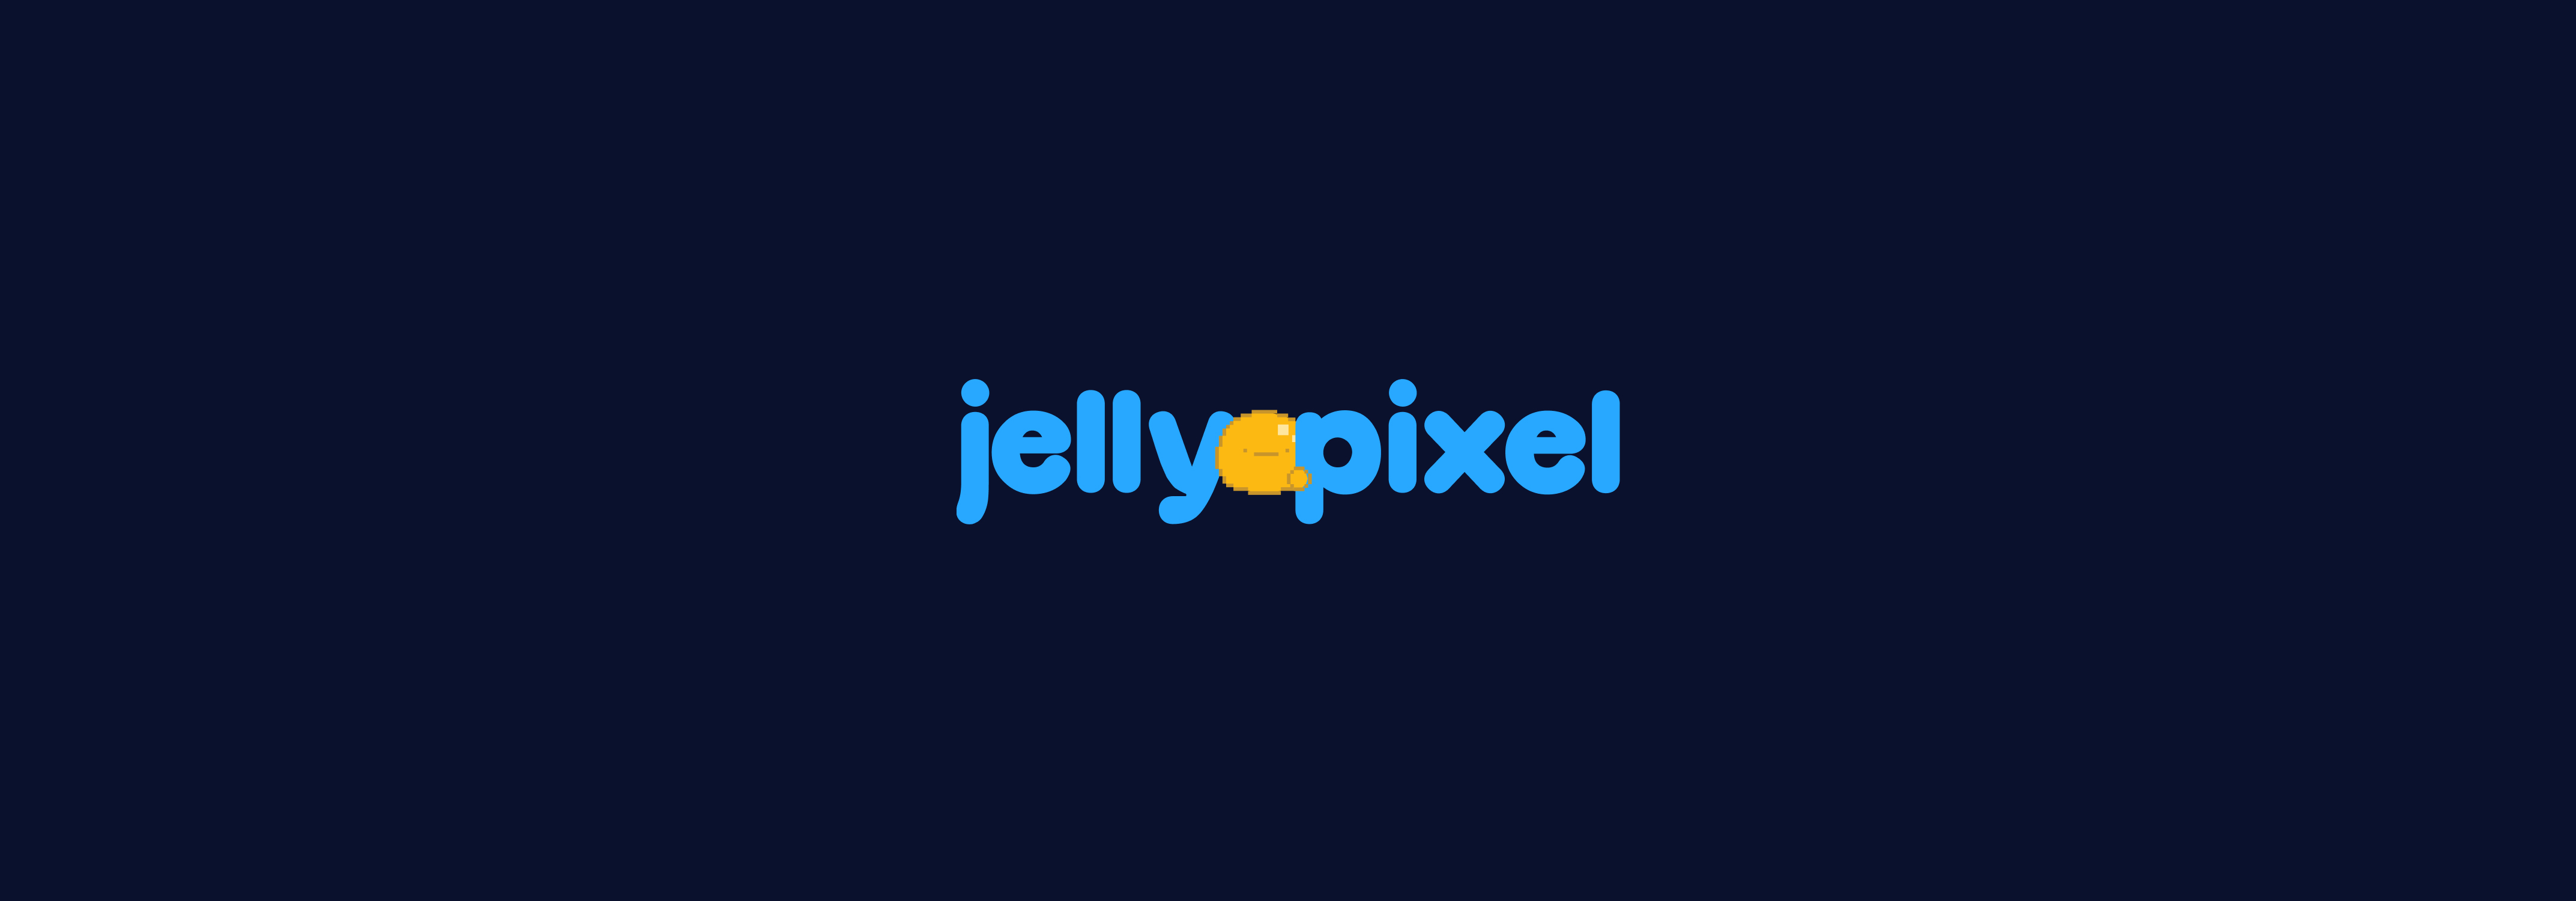 Case Study: Jelly Pixel Studio’s Journey With WordPress.com